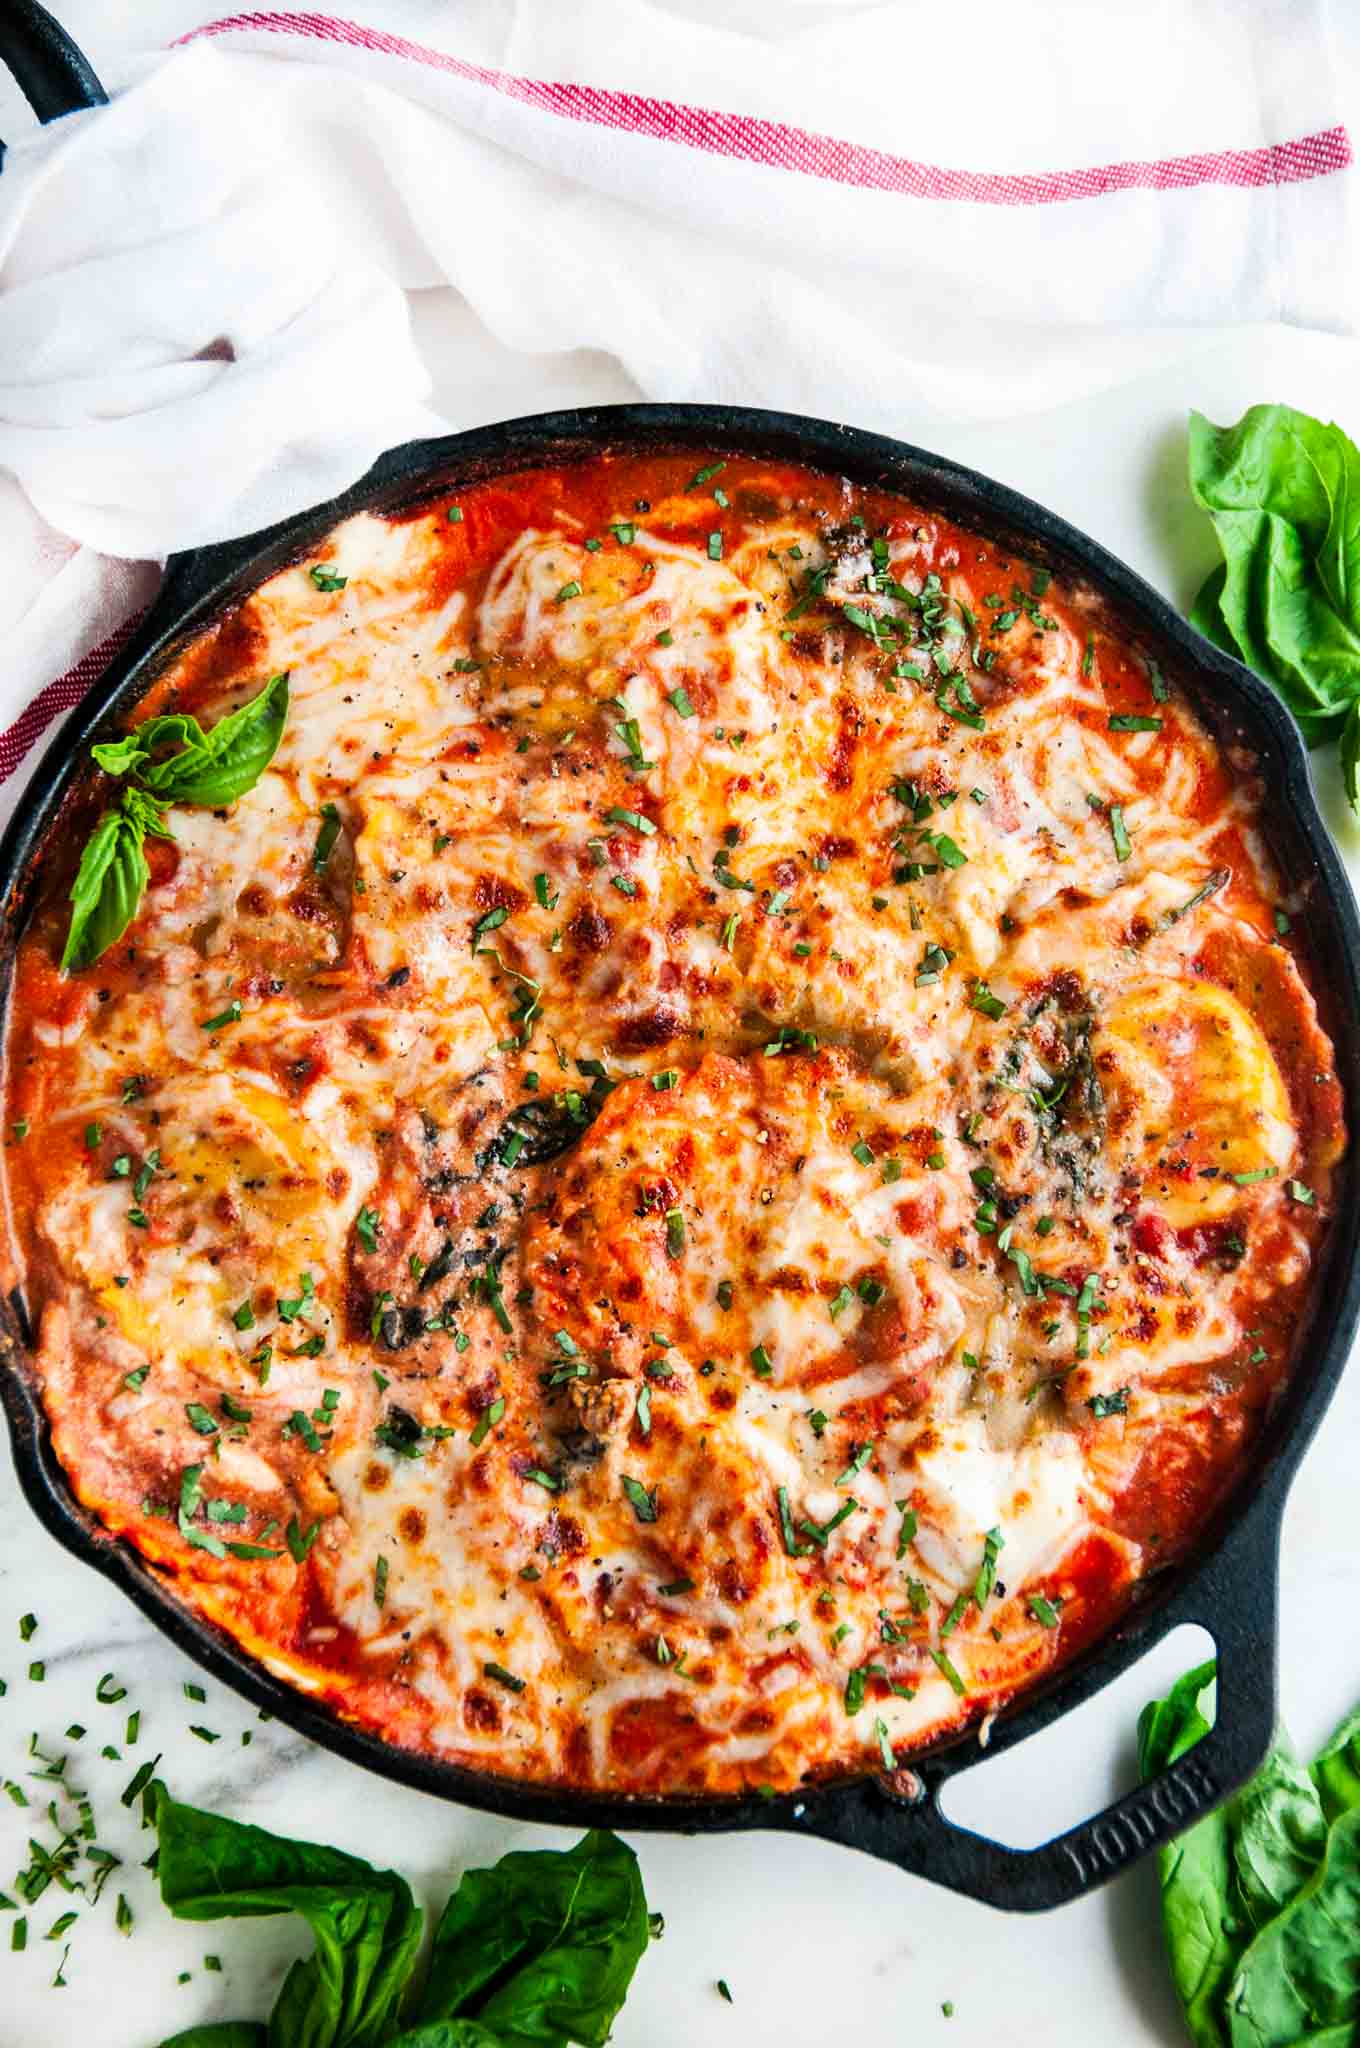 https://www.aberdeenskitchen.com/wp-content/uploads/2017/12/One-Pot-Skillet-Ravioli-Lasagna-with-Spinach-and-Kale-4.jpg